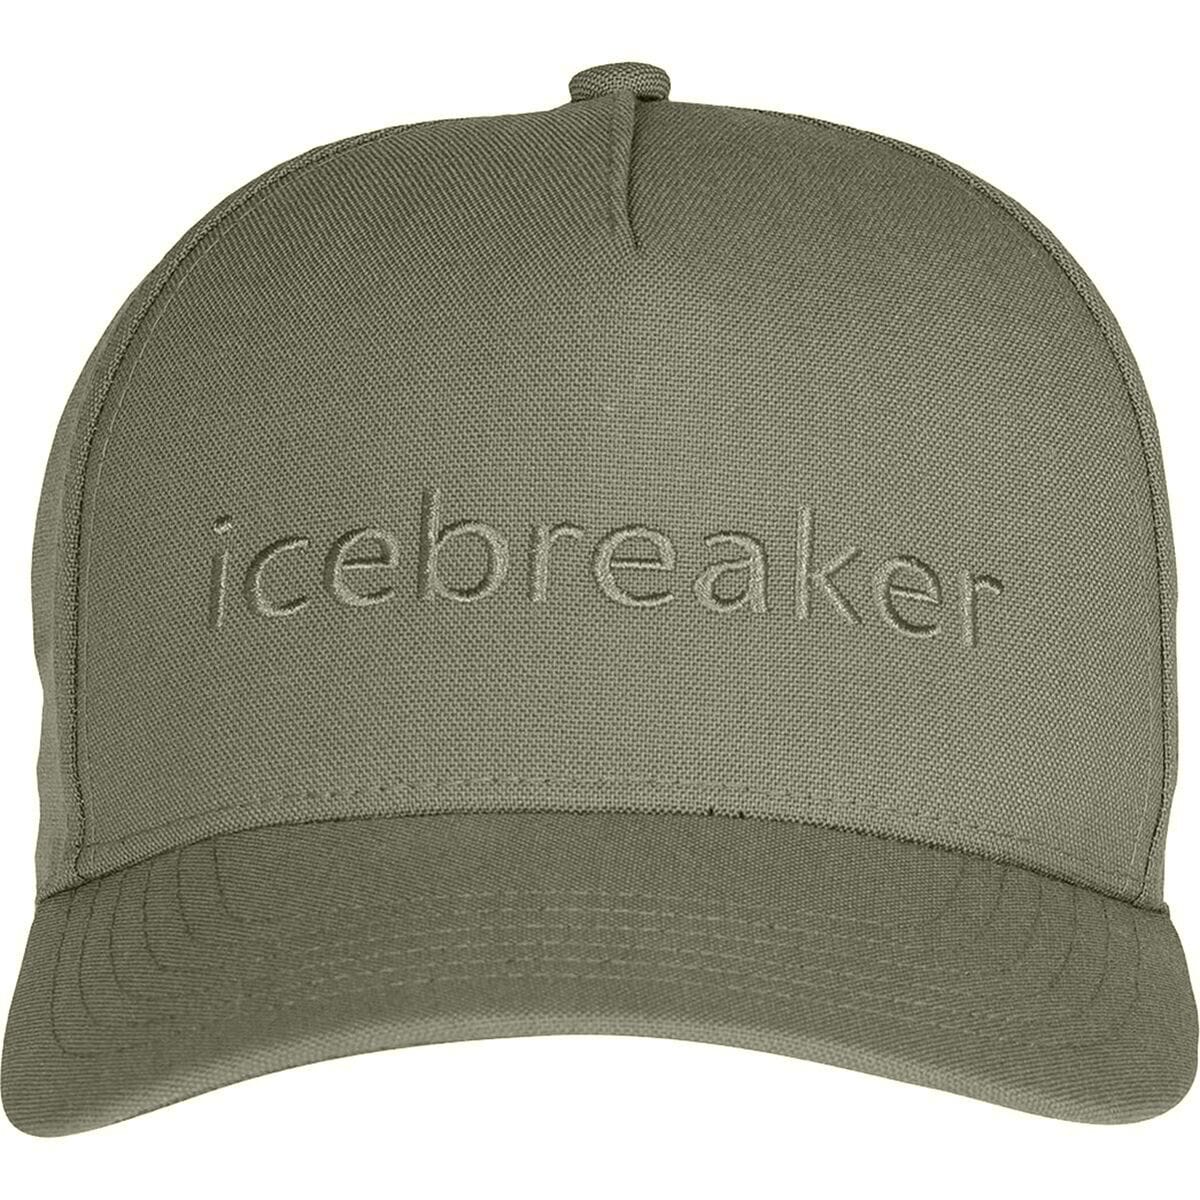 Icebreaker Logo Hat